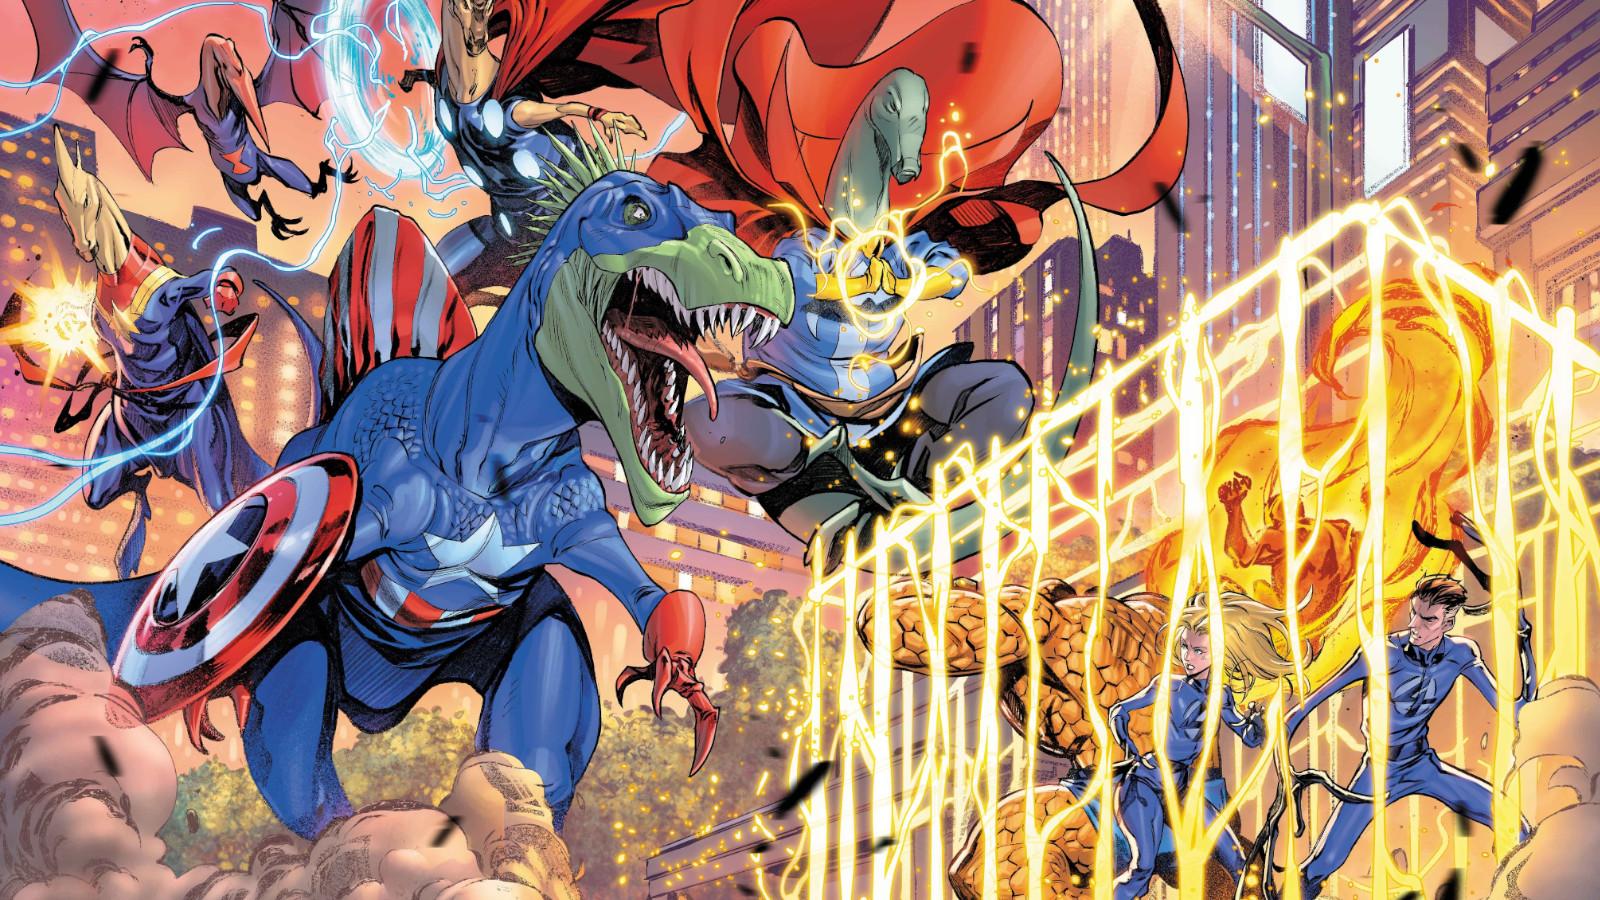 Dinosaur Avengers meet the Fantastic Four